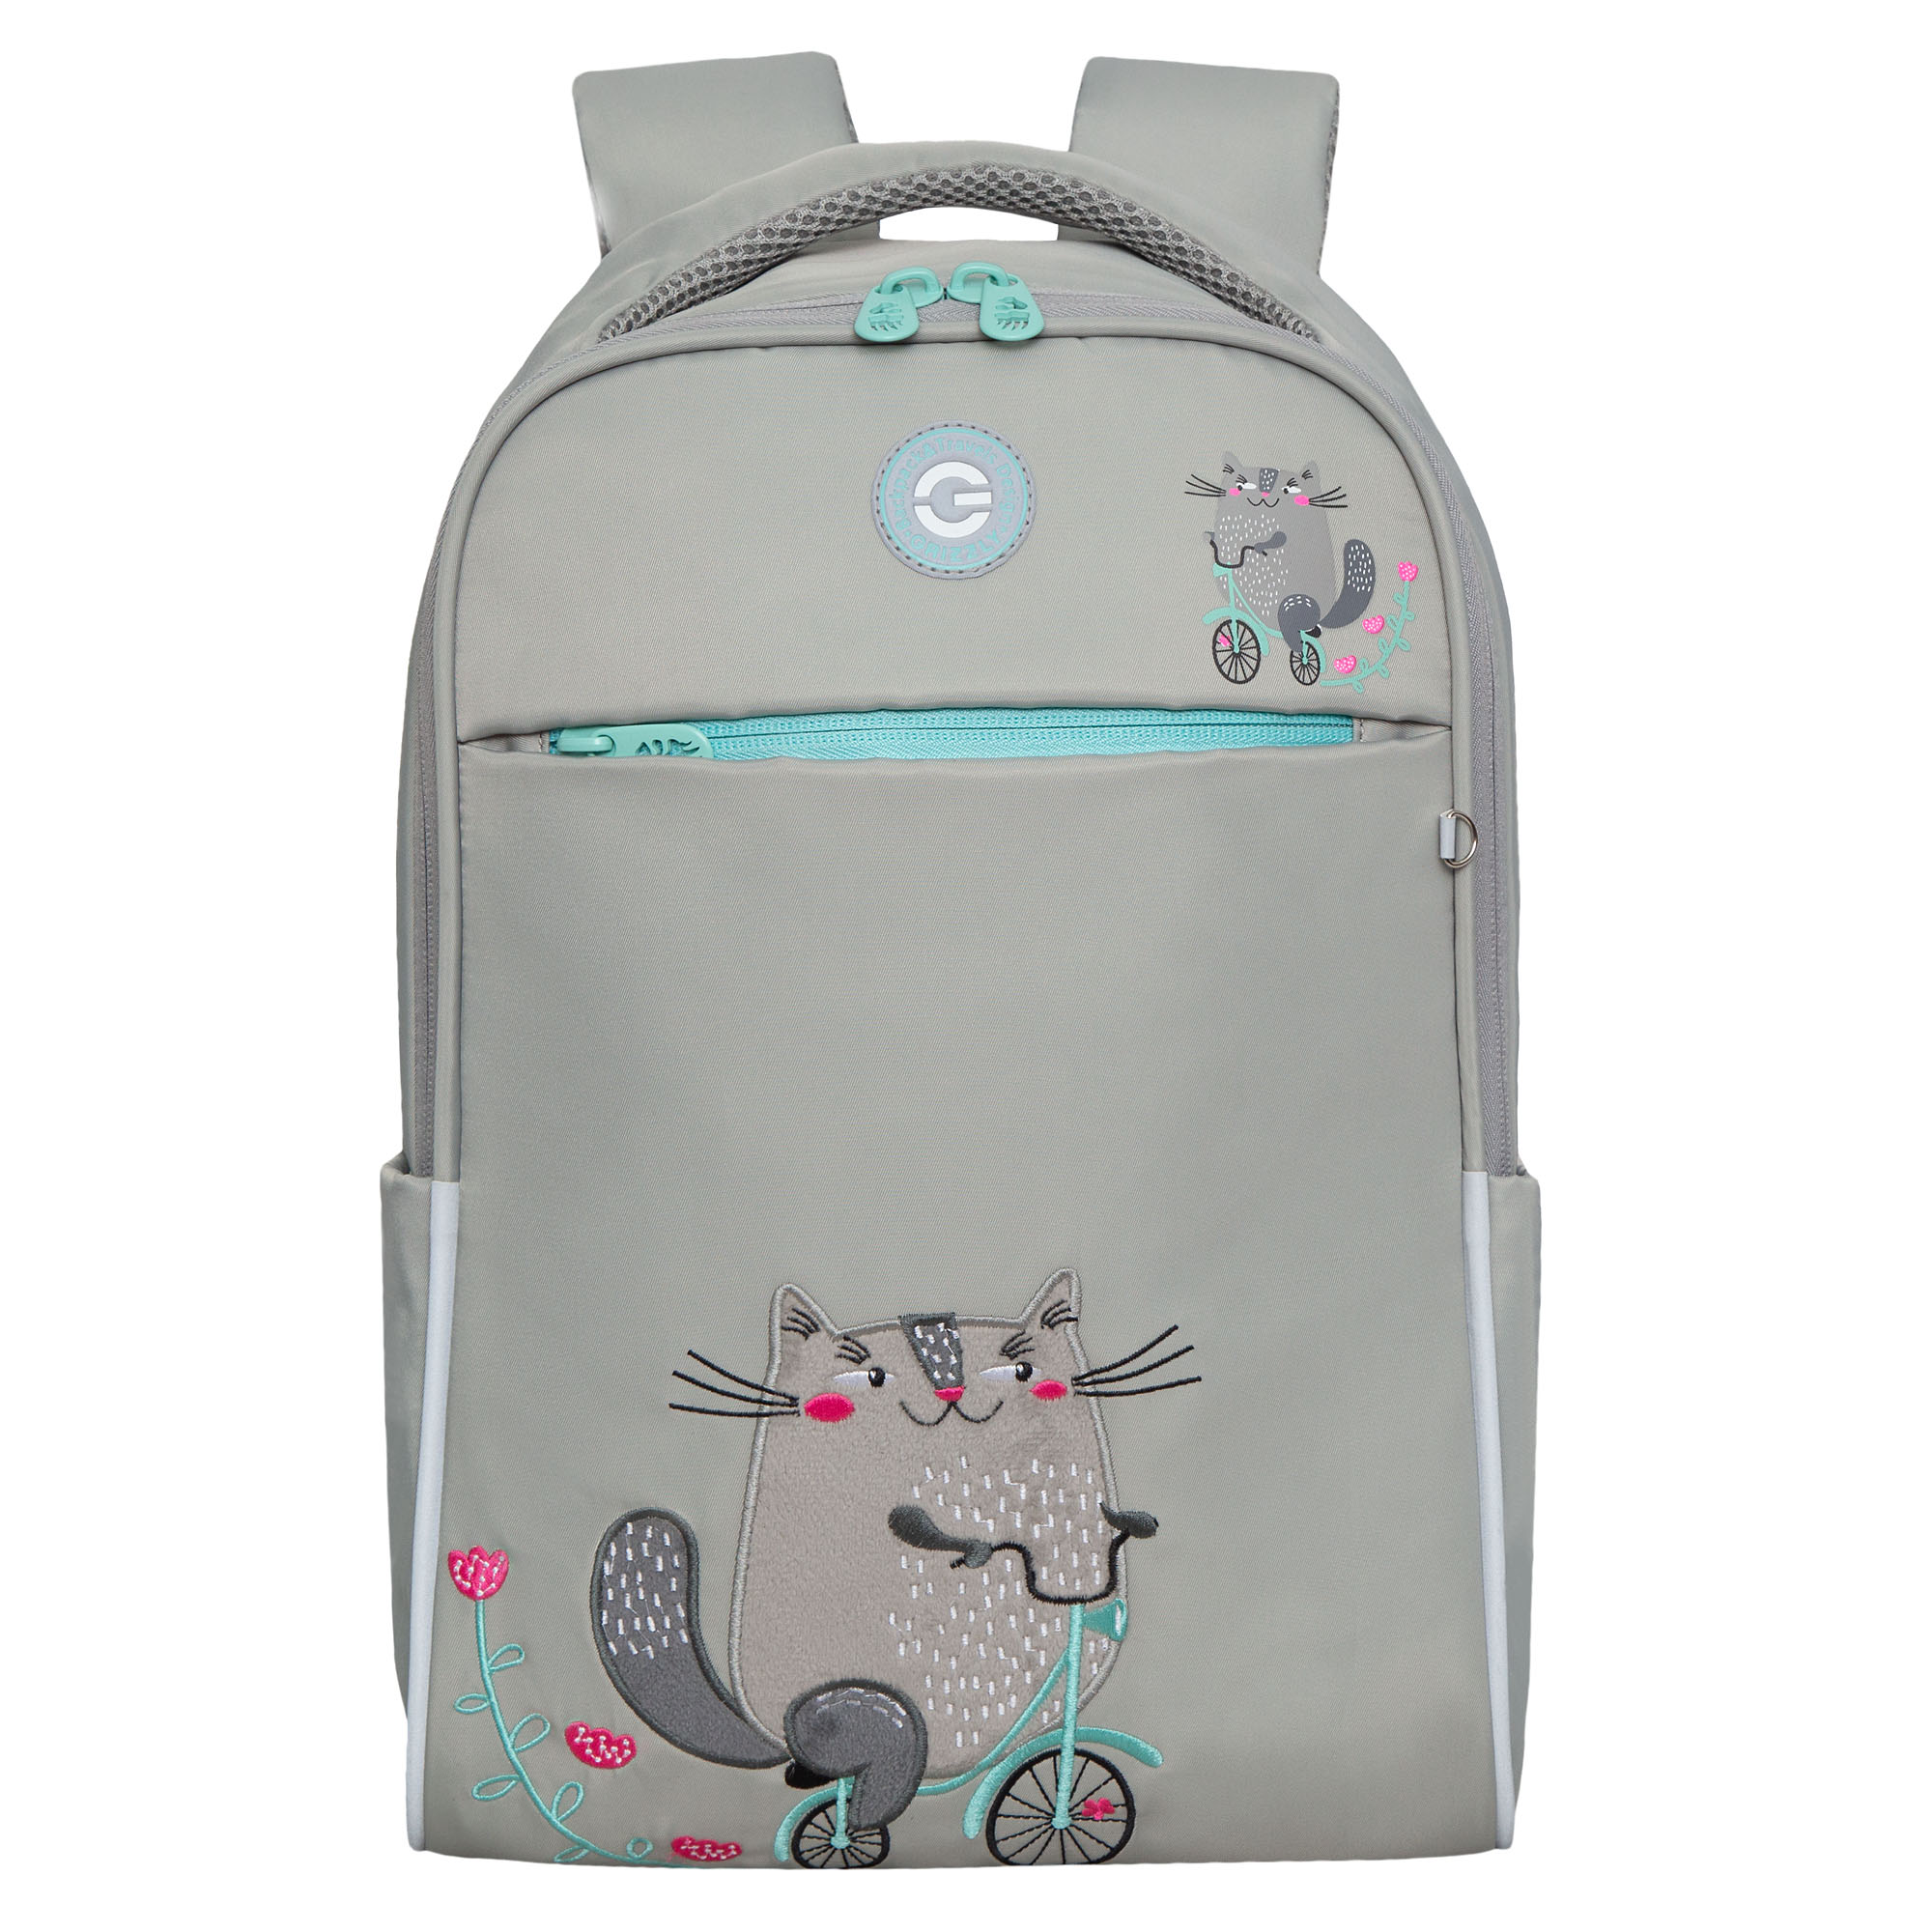 Рюкзак Grizzly школьный для девочки RG-367-3 2 серый рюкзак для мальчиков grizzly ru 437 4 серый